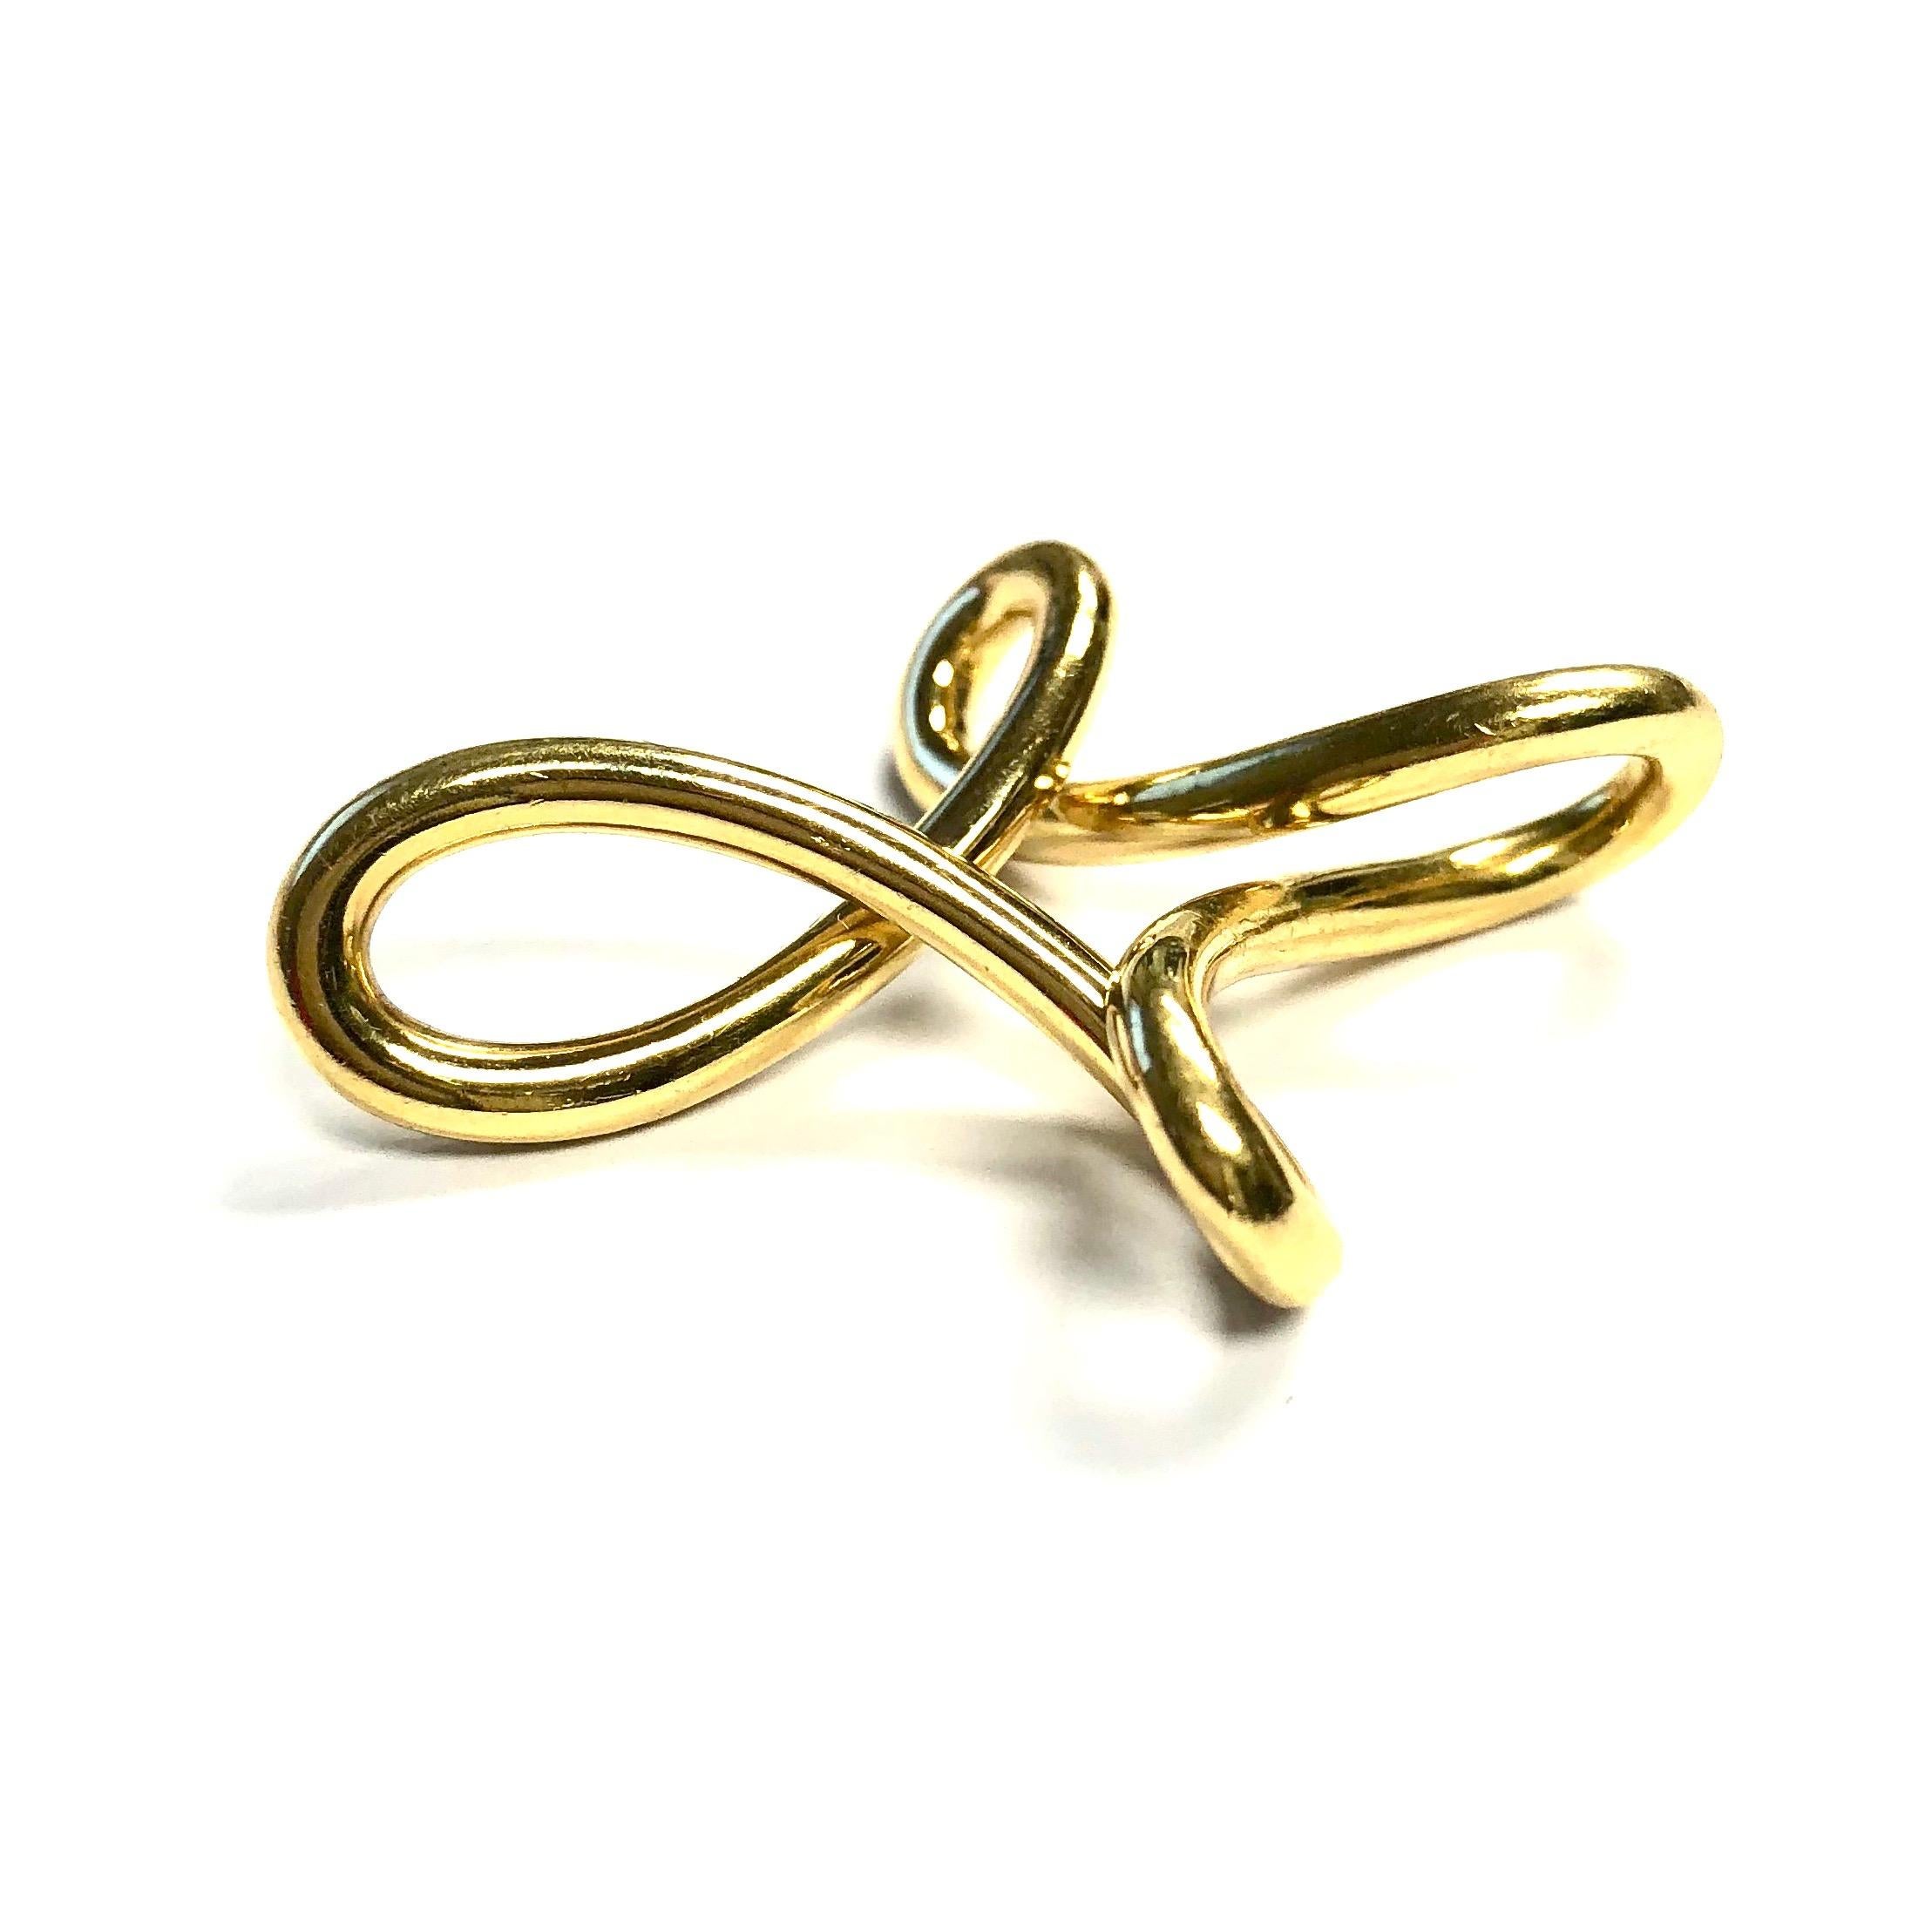 Elsa Peretti for Tiffany & Co 18K yellow gold infinity cross pendant. 
Measurements:  1 3/4